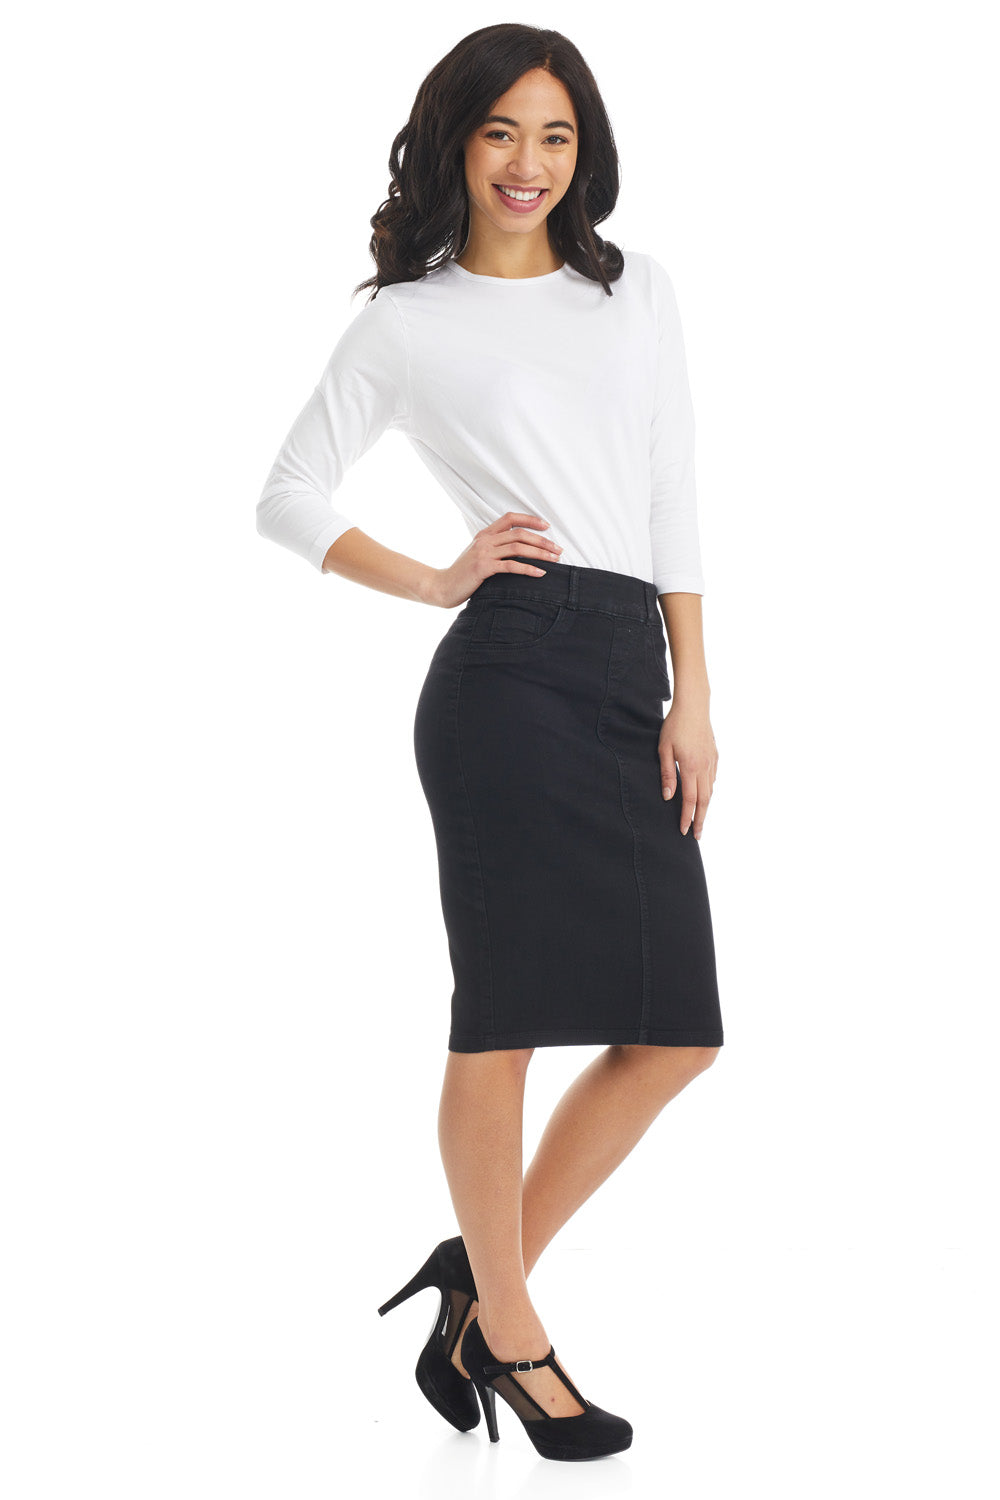 black modest tight pencil skirt